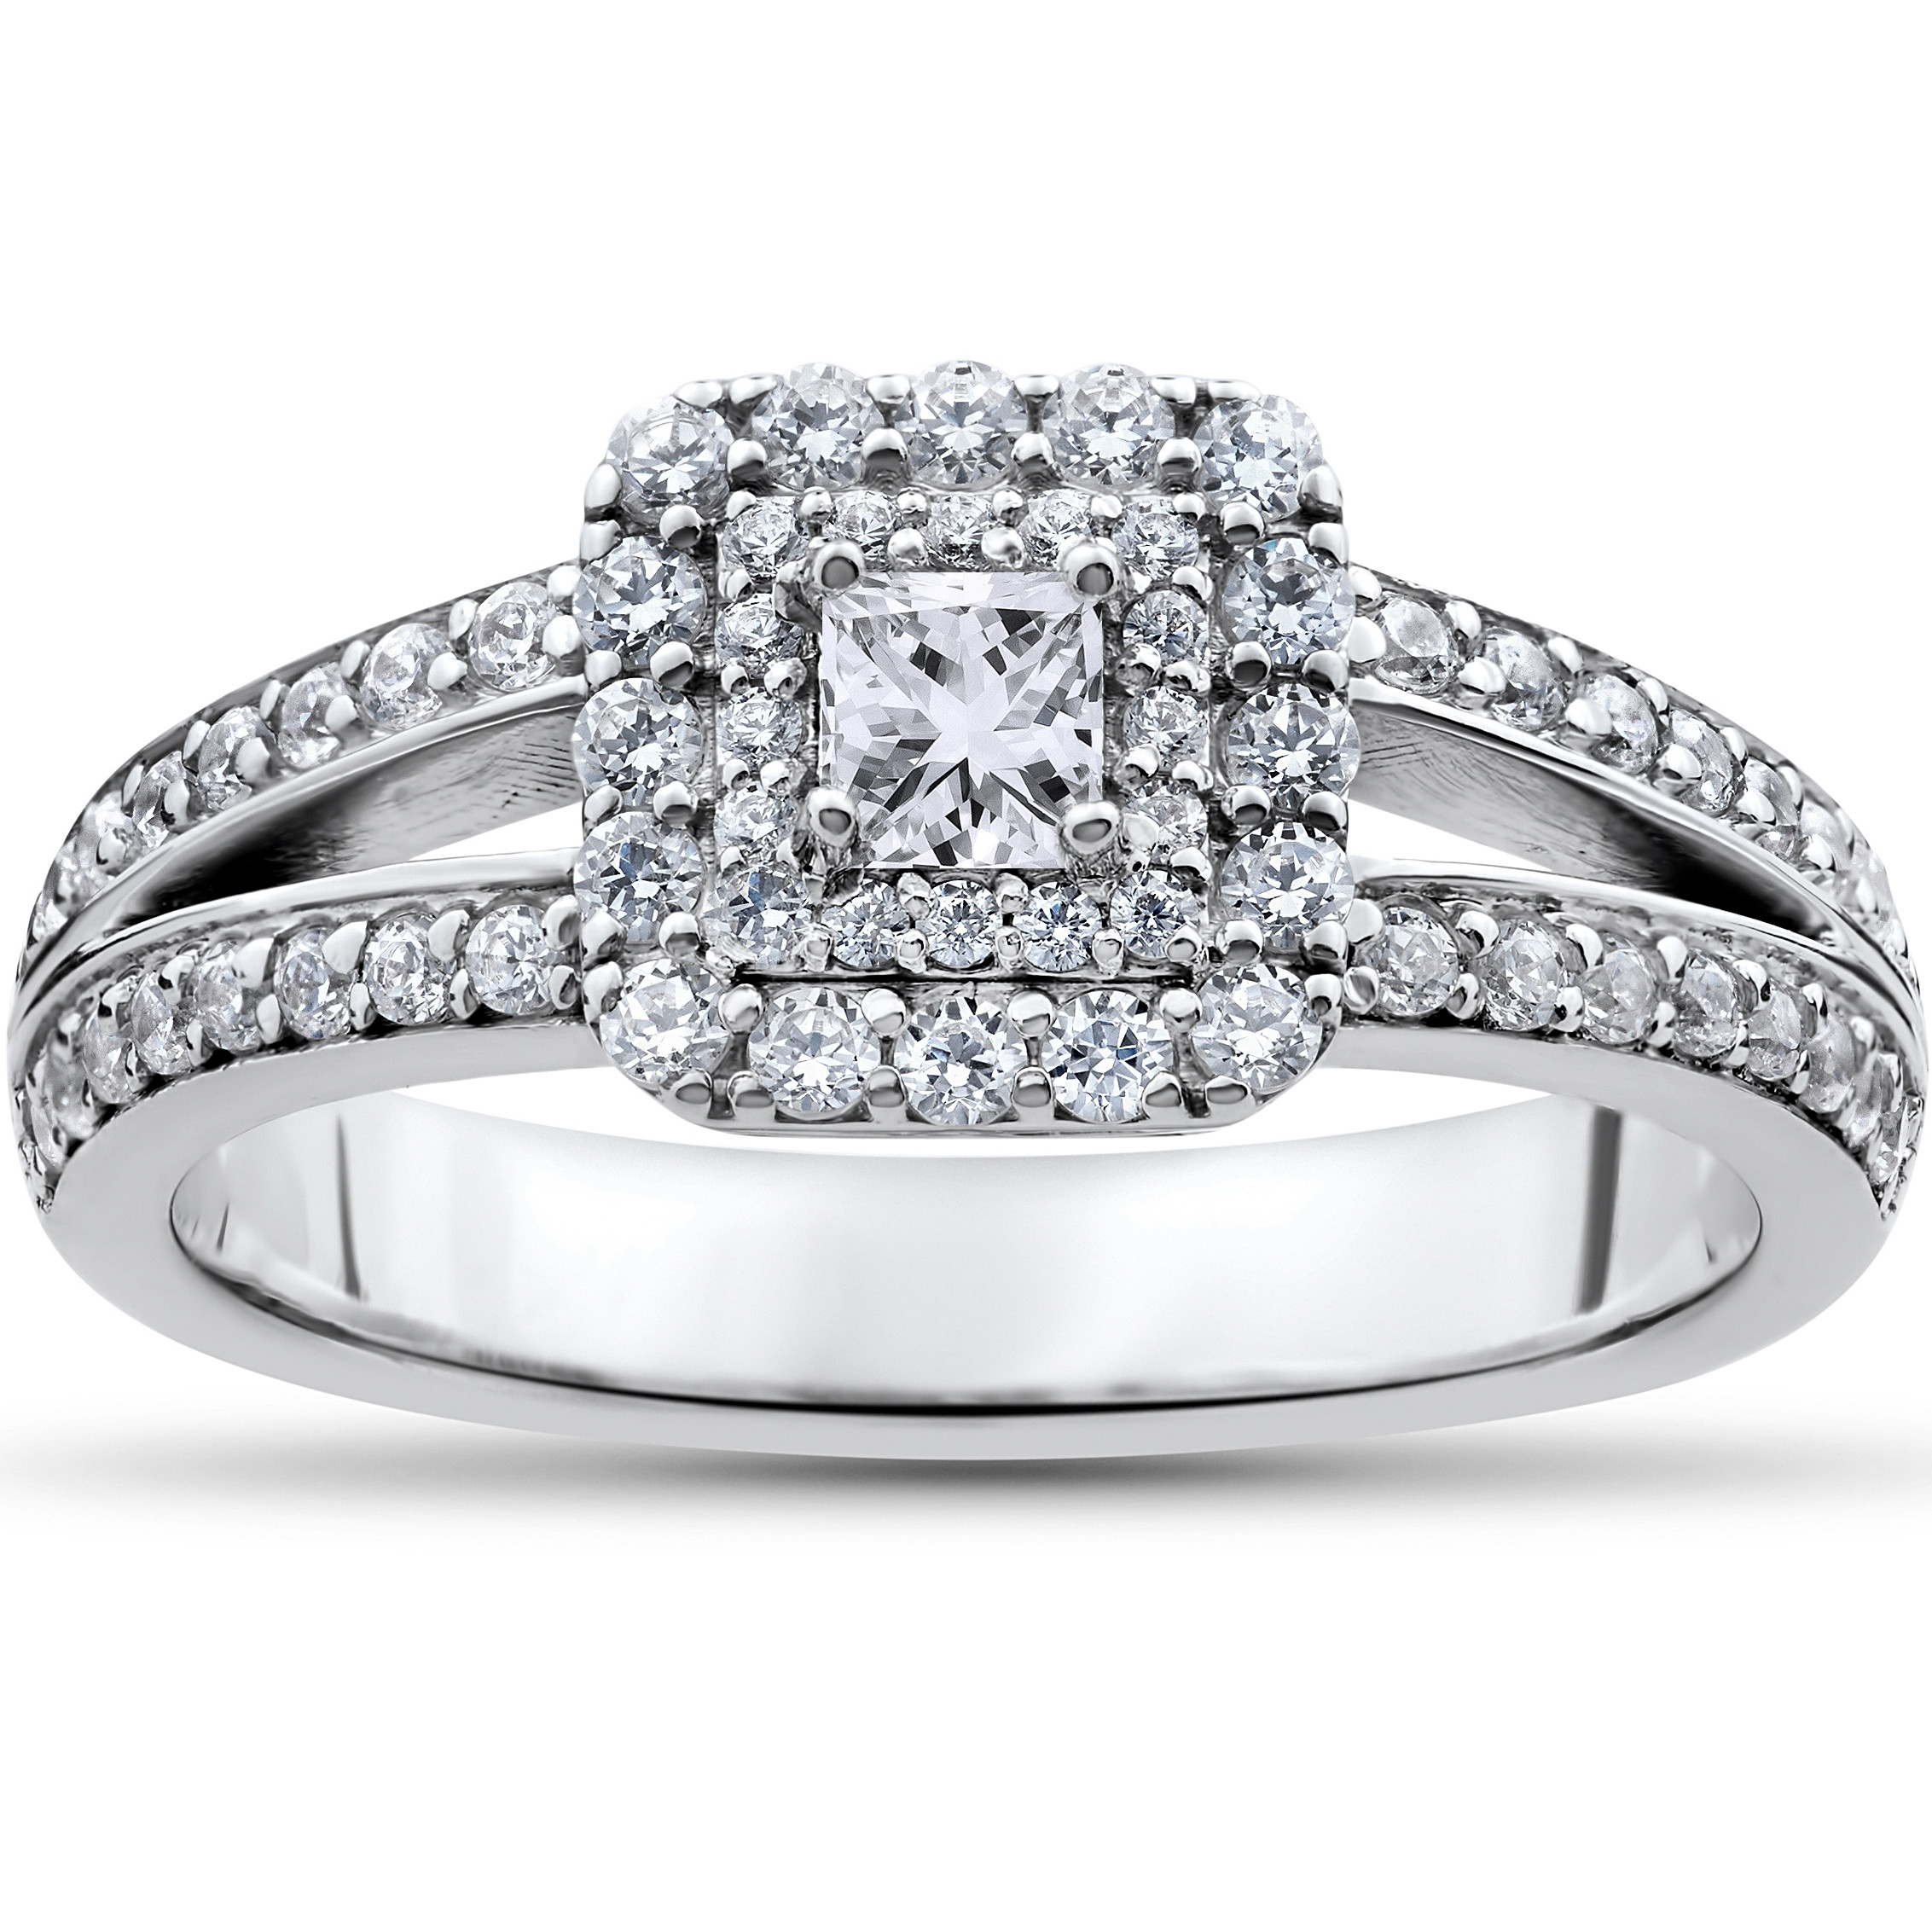 Princess Cut White Gold Engagement Rings
 1 ct Princess Cut Diamond Double Halo Engagement Ring 14k